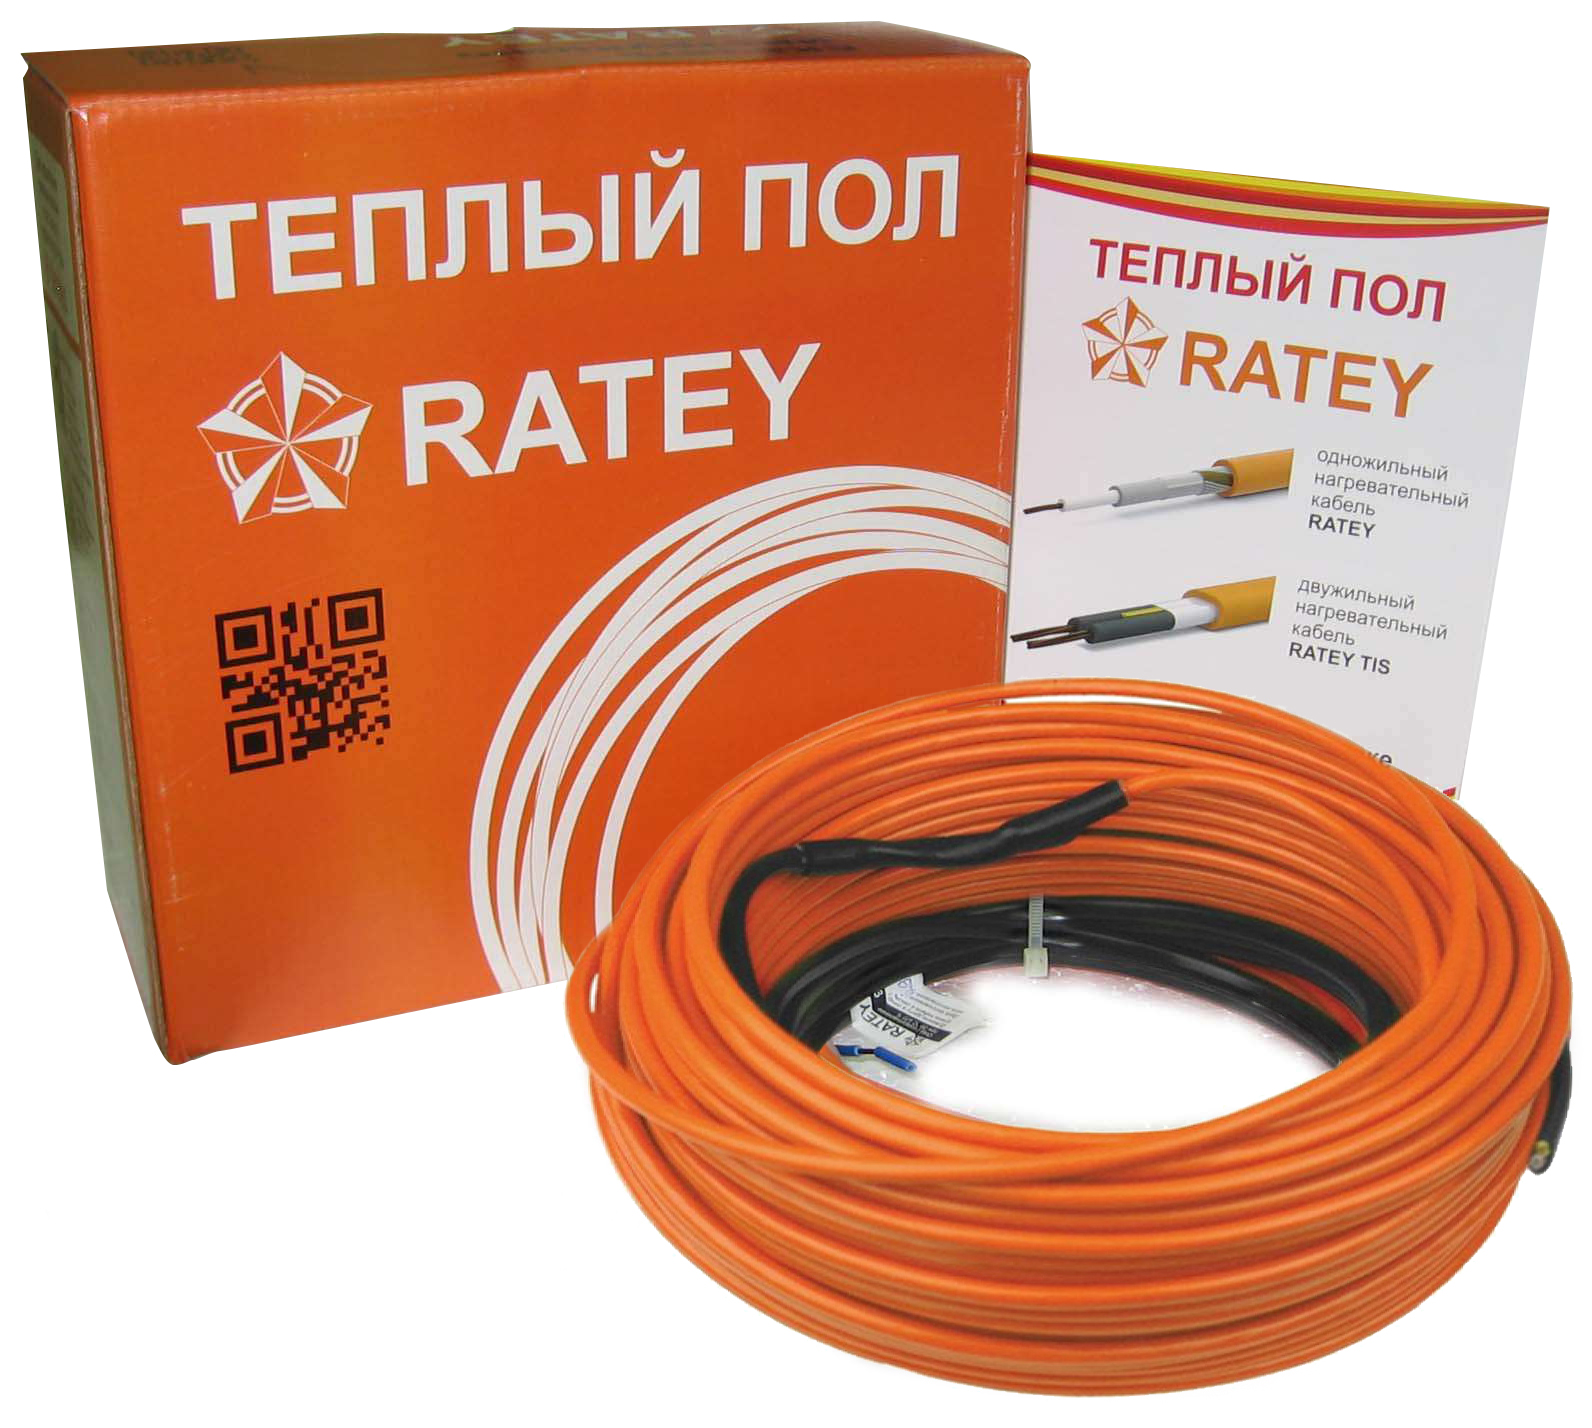 Електрична тепла підлога Ratey RD1 0.485